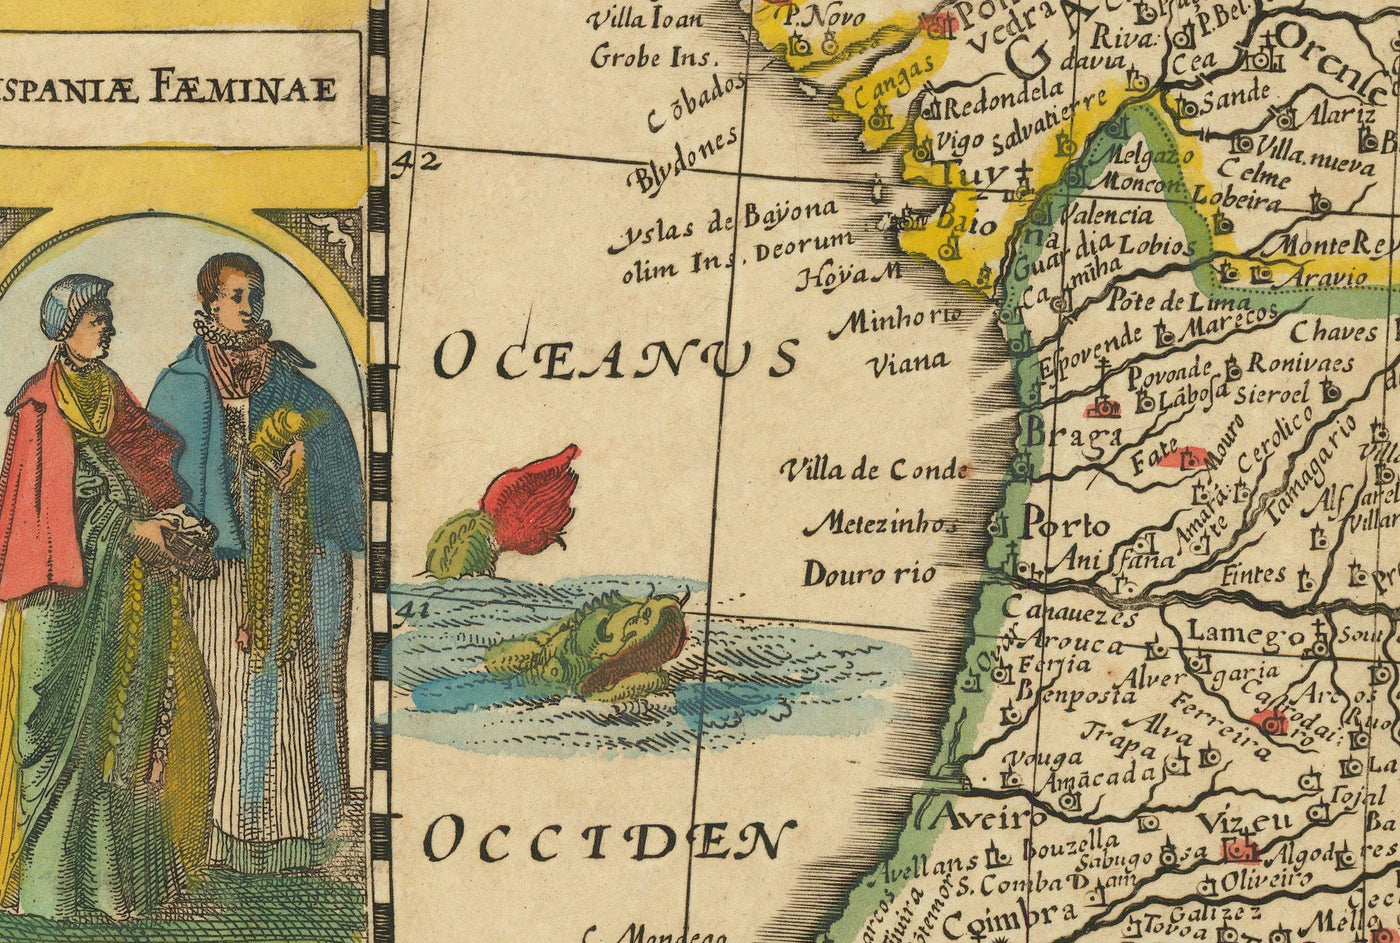 Old Map of Spain & Portugal, 1659 by Jan Jansson - Madrid, Lisbon, Barcelona, Catalonia, Valencia, Iberia, Mediterranean Sea